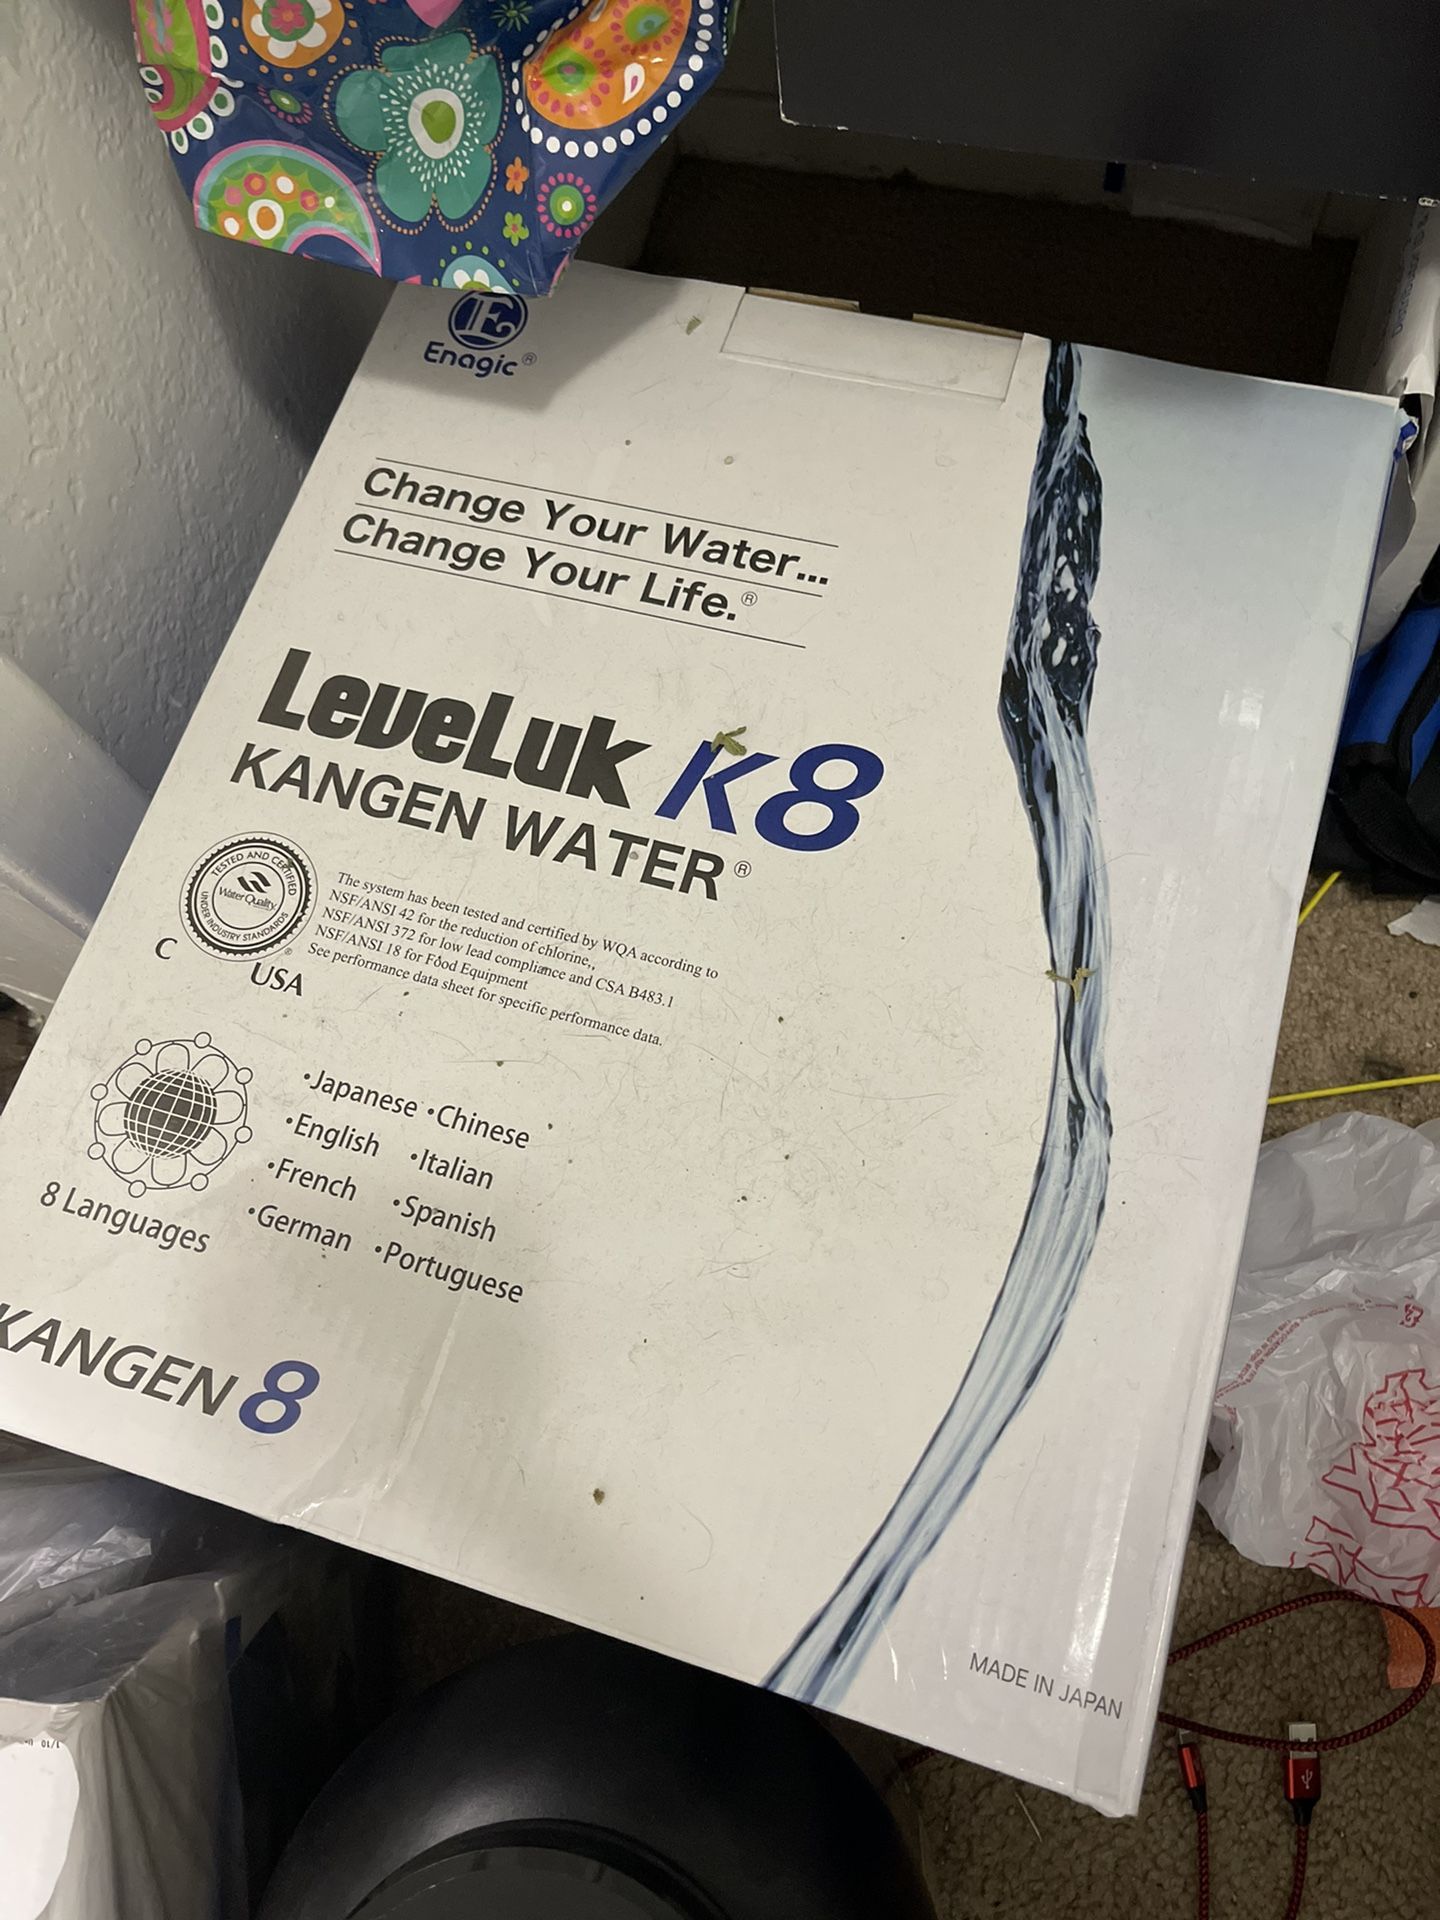 LeveLuk K8 Kangen Water